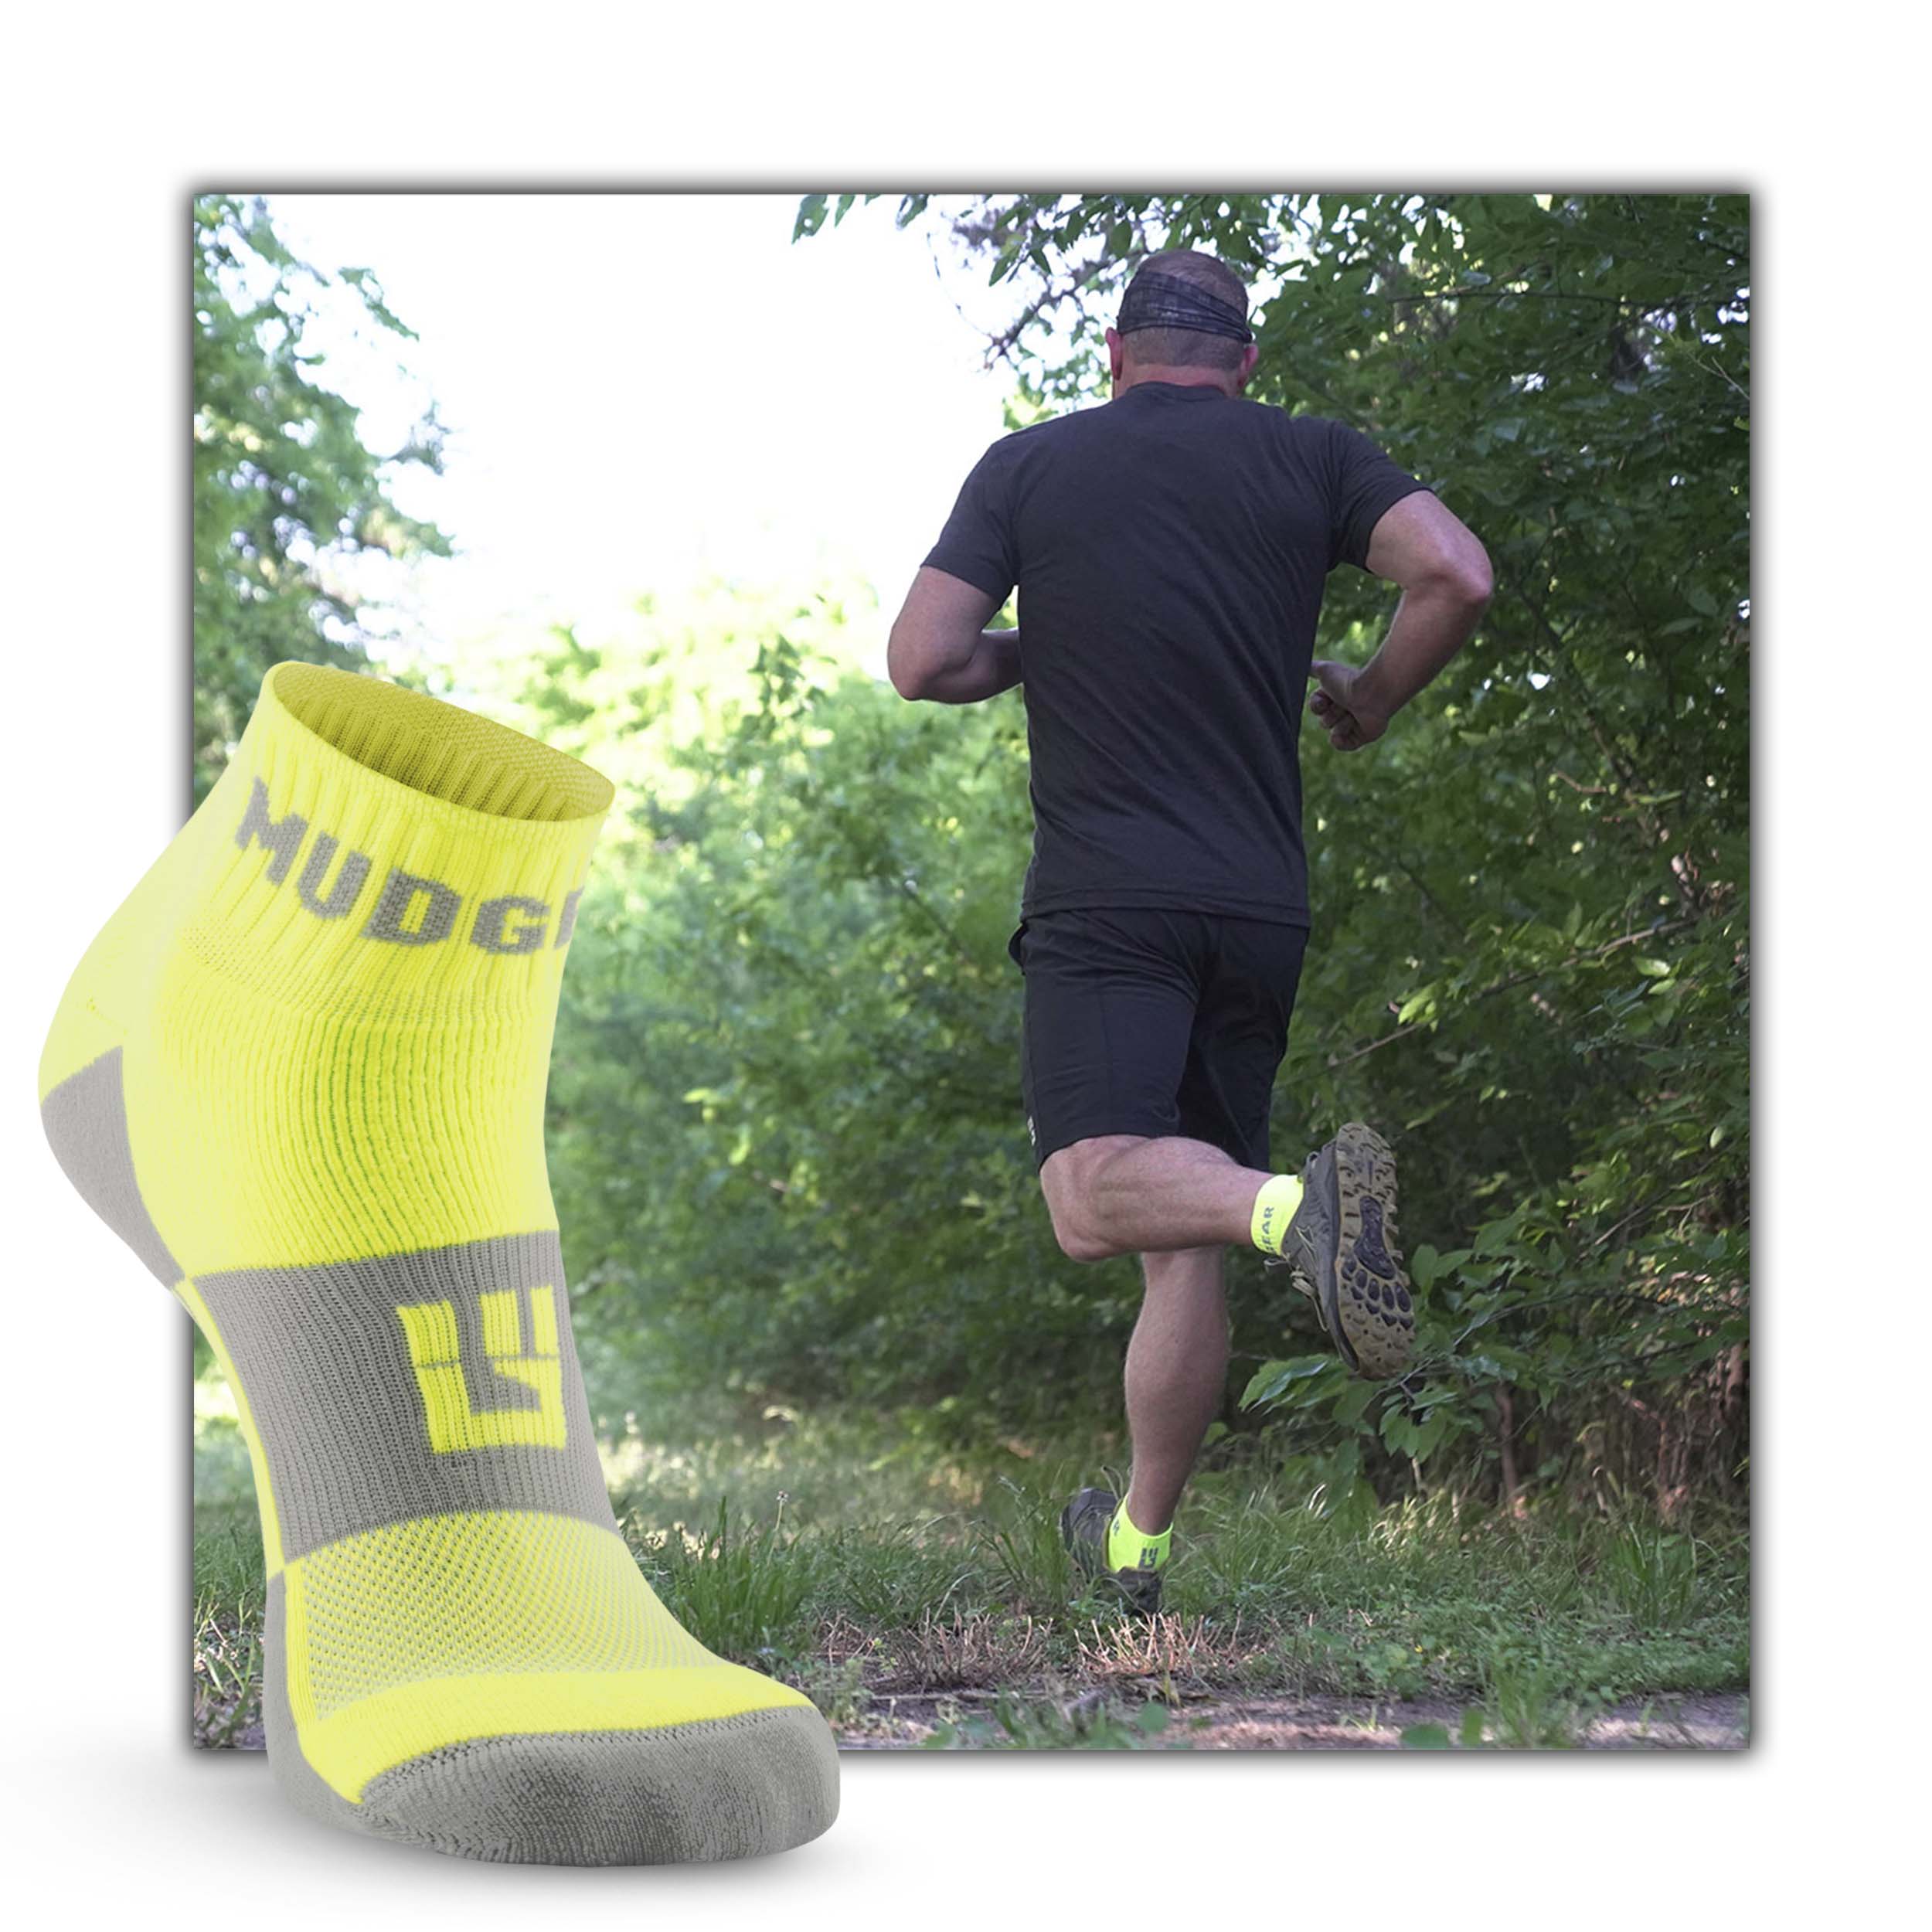 durable trail running socks